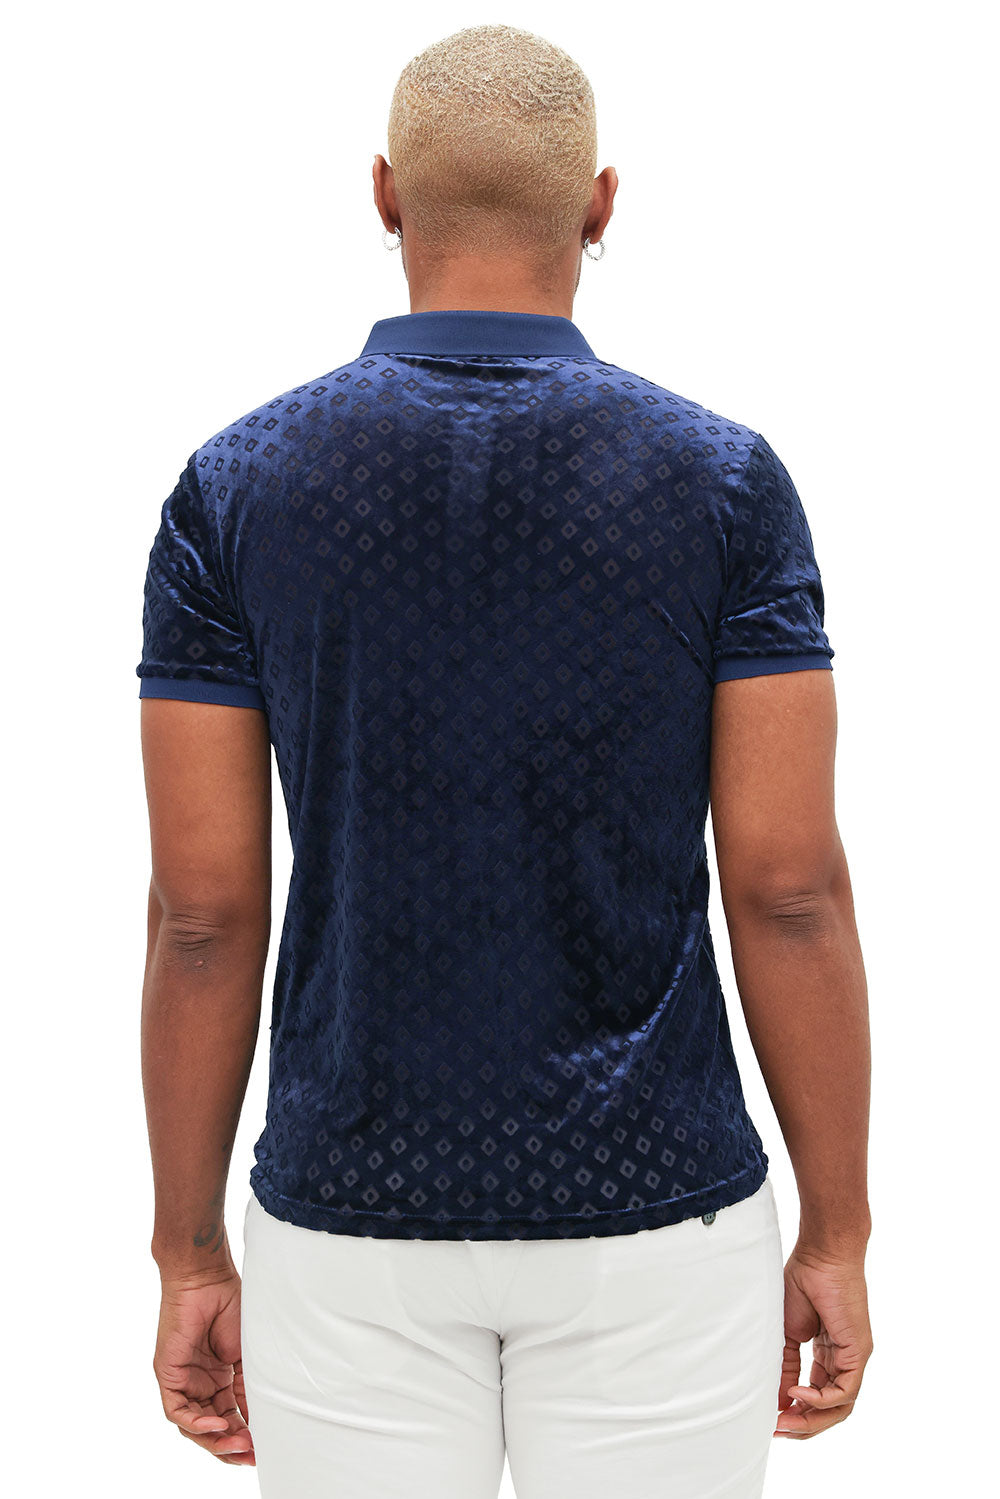 BARABAS men's diamond pattern short sleeve polo shirts 3PP837 Navy